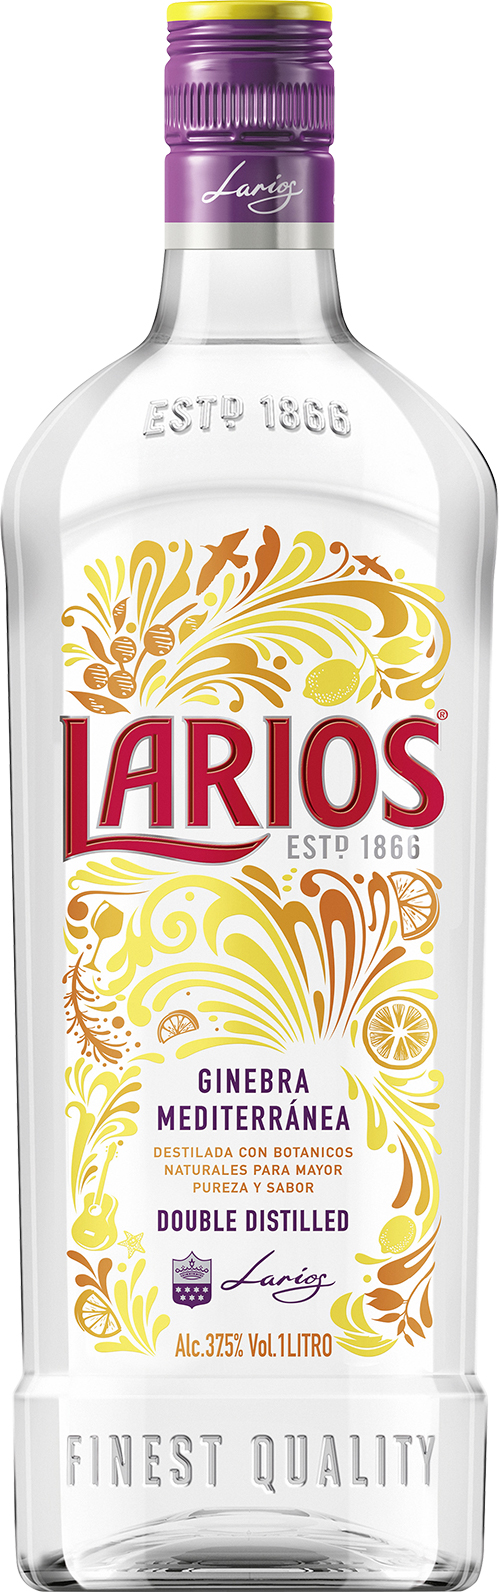 Larios London Dry Gin 37,5%